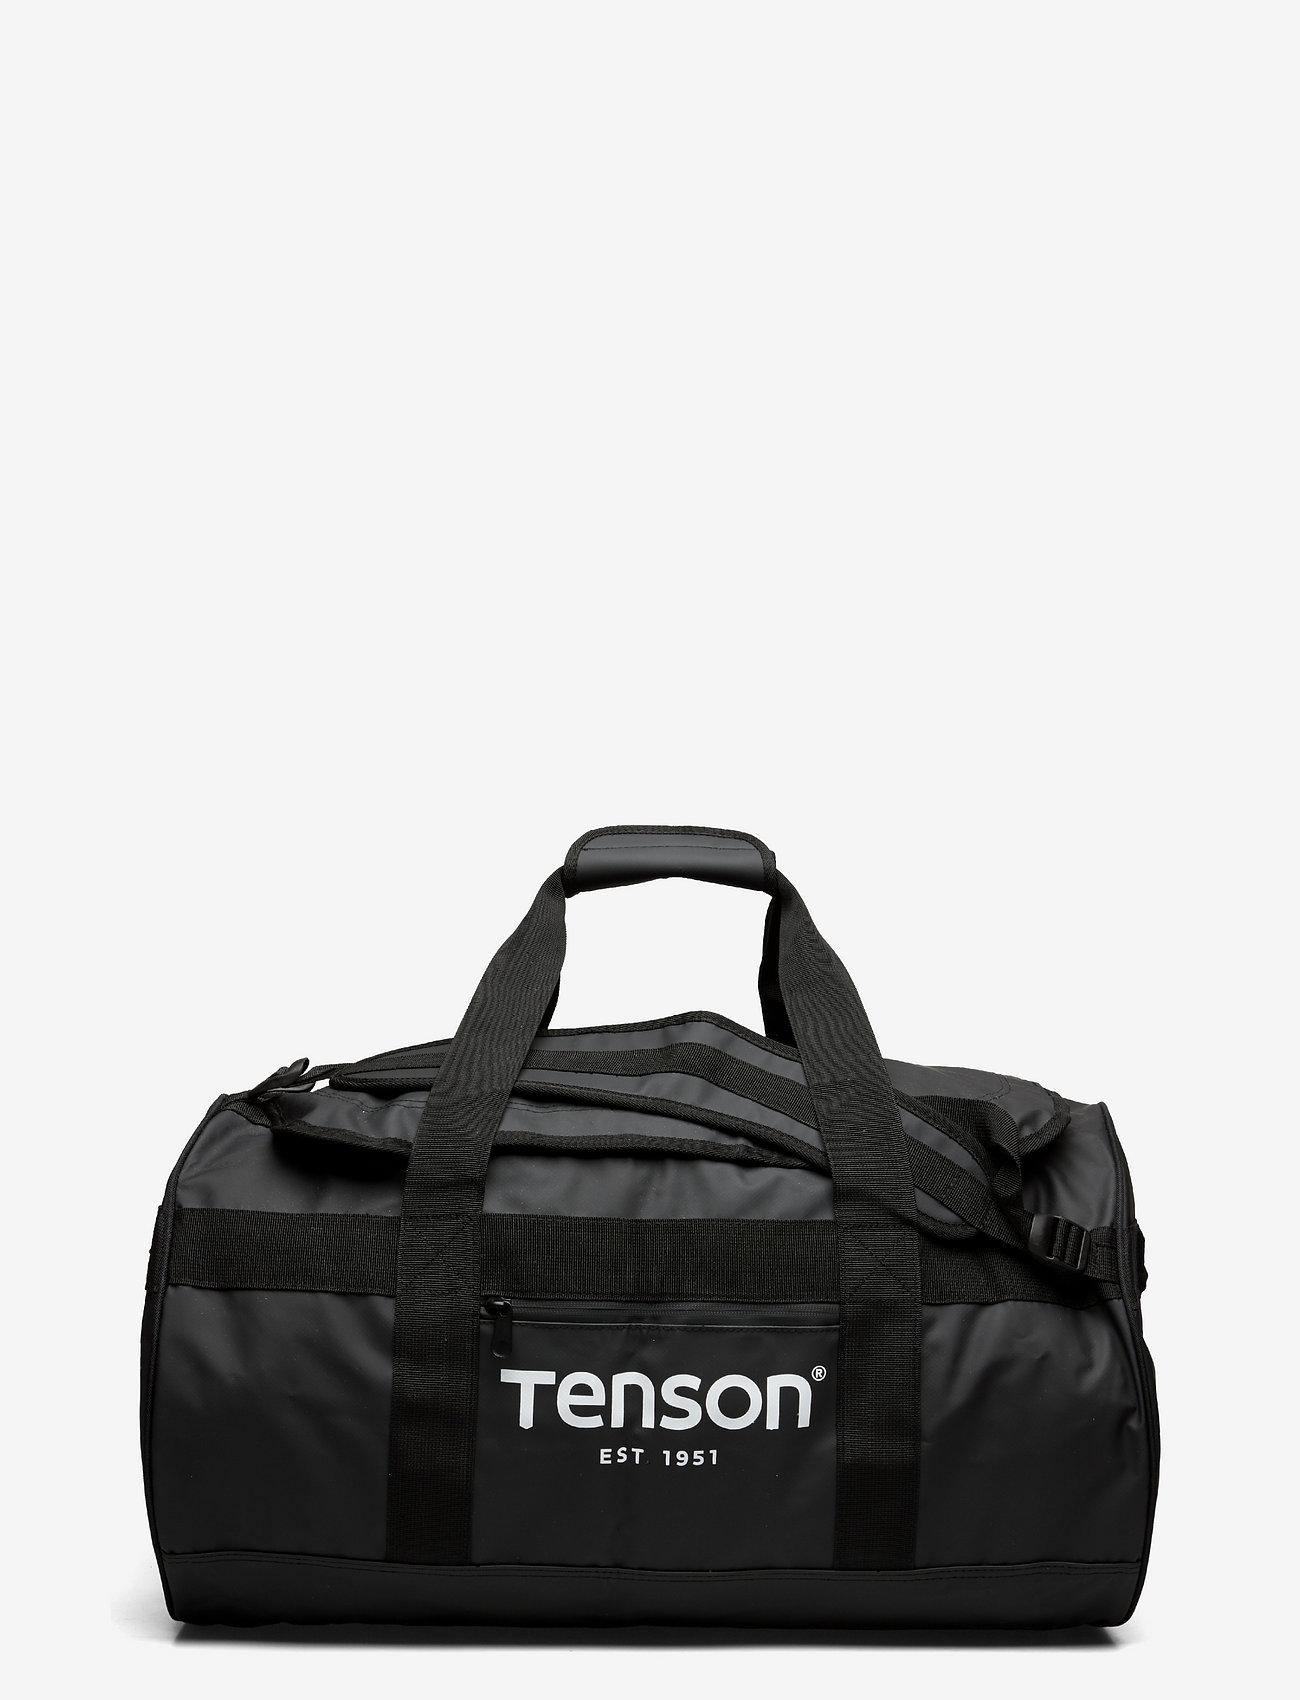 Tenson - Travel bag 65 L - black - 0